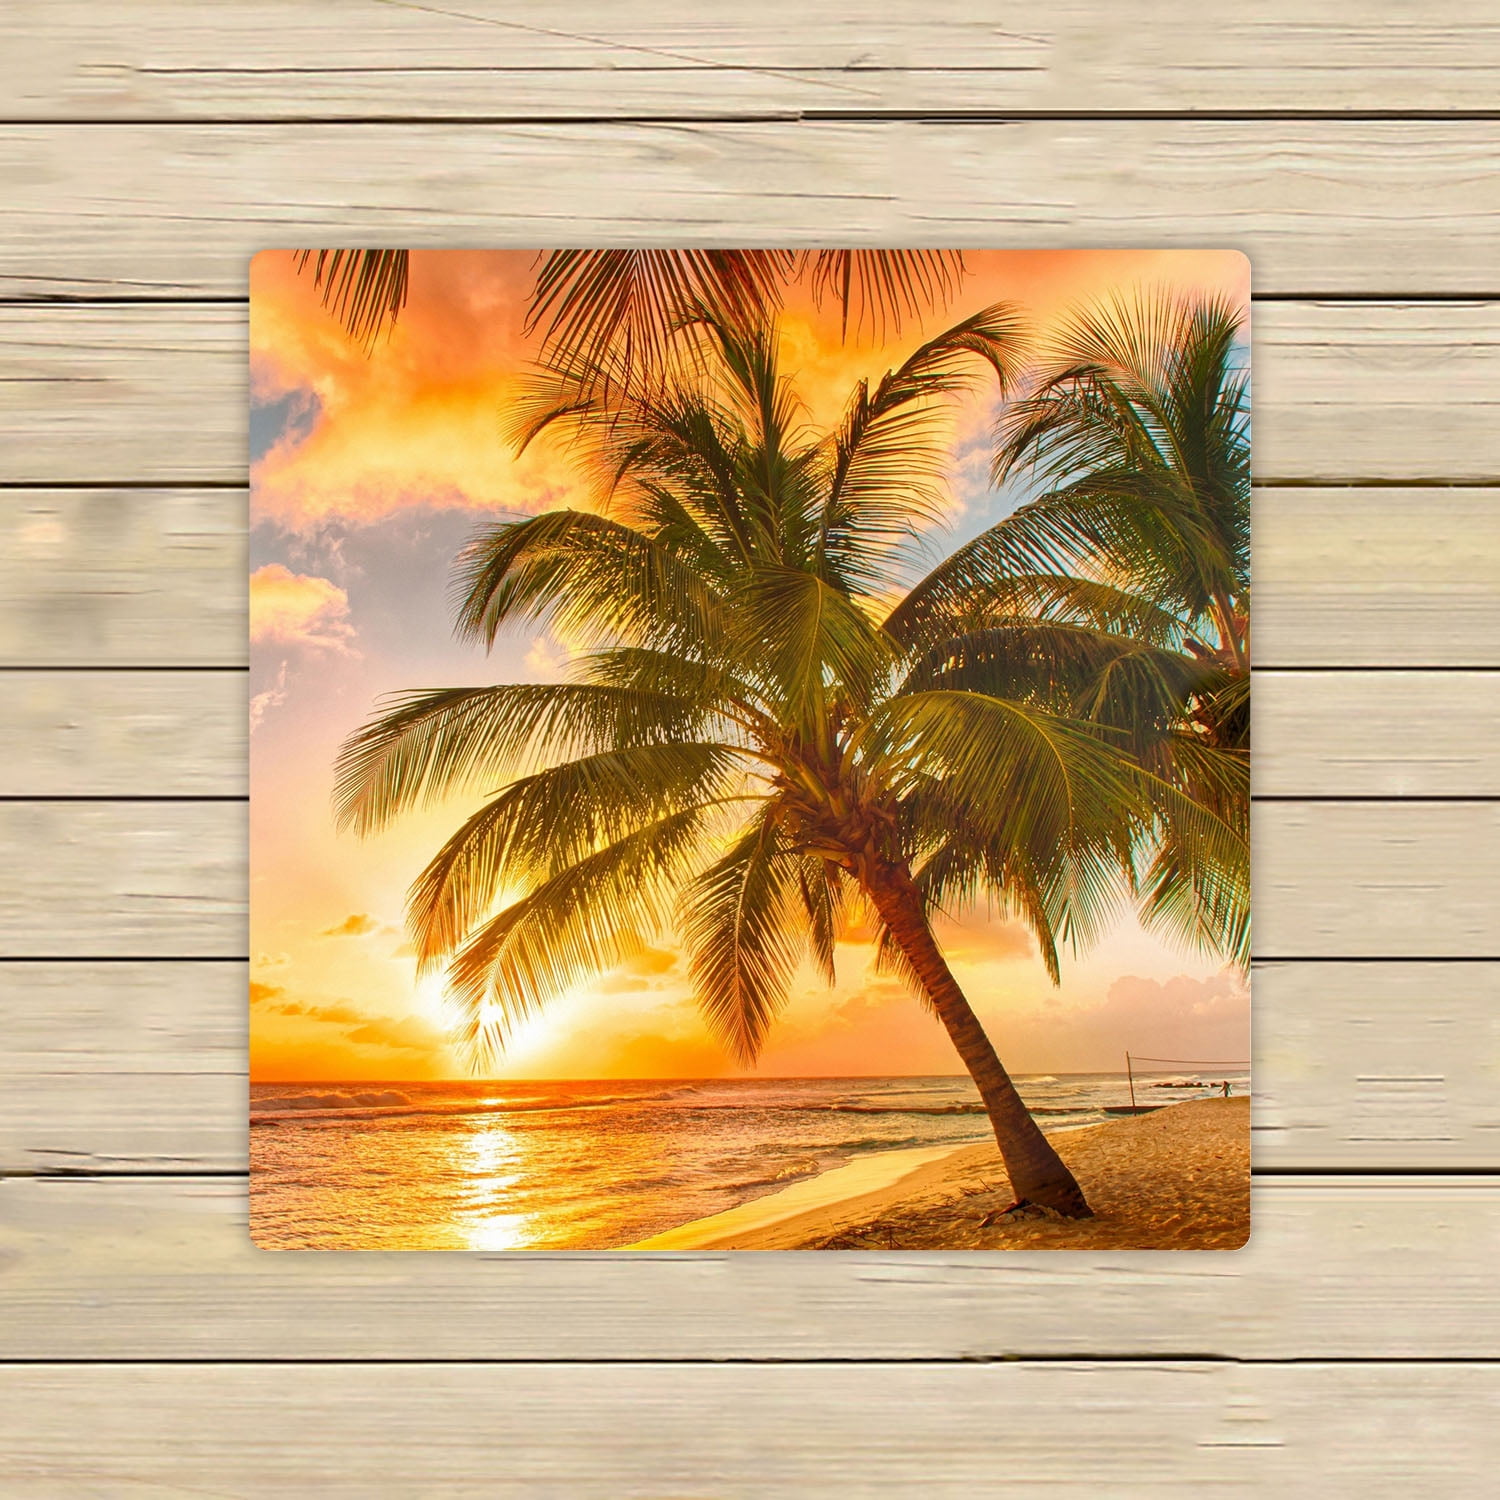 New Orange Red Sky Palm Tree Tropical Island Bath Beach Pool Gift Towel Sunset 